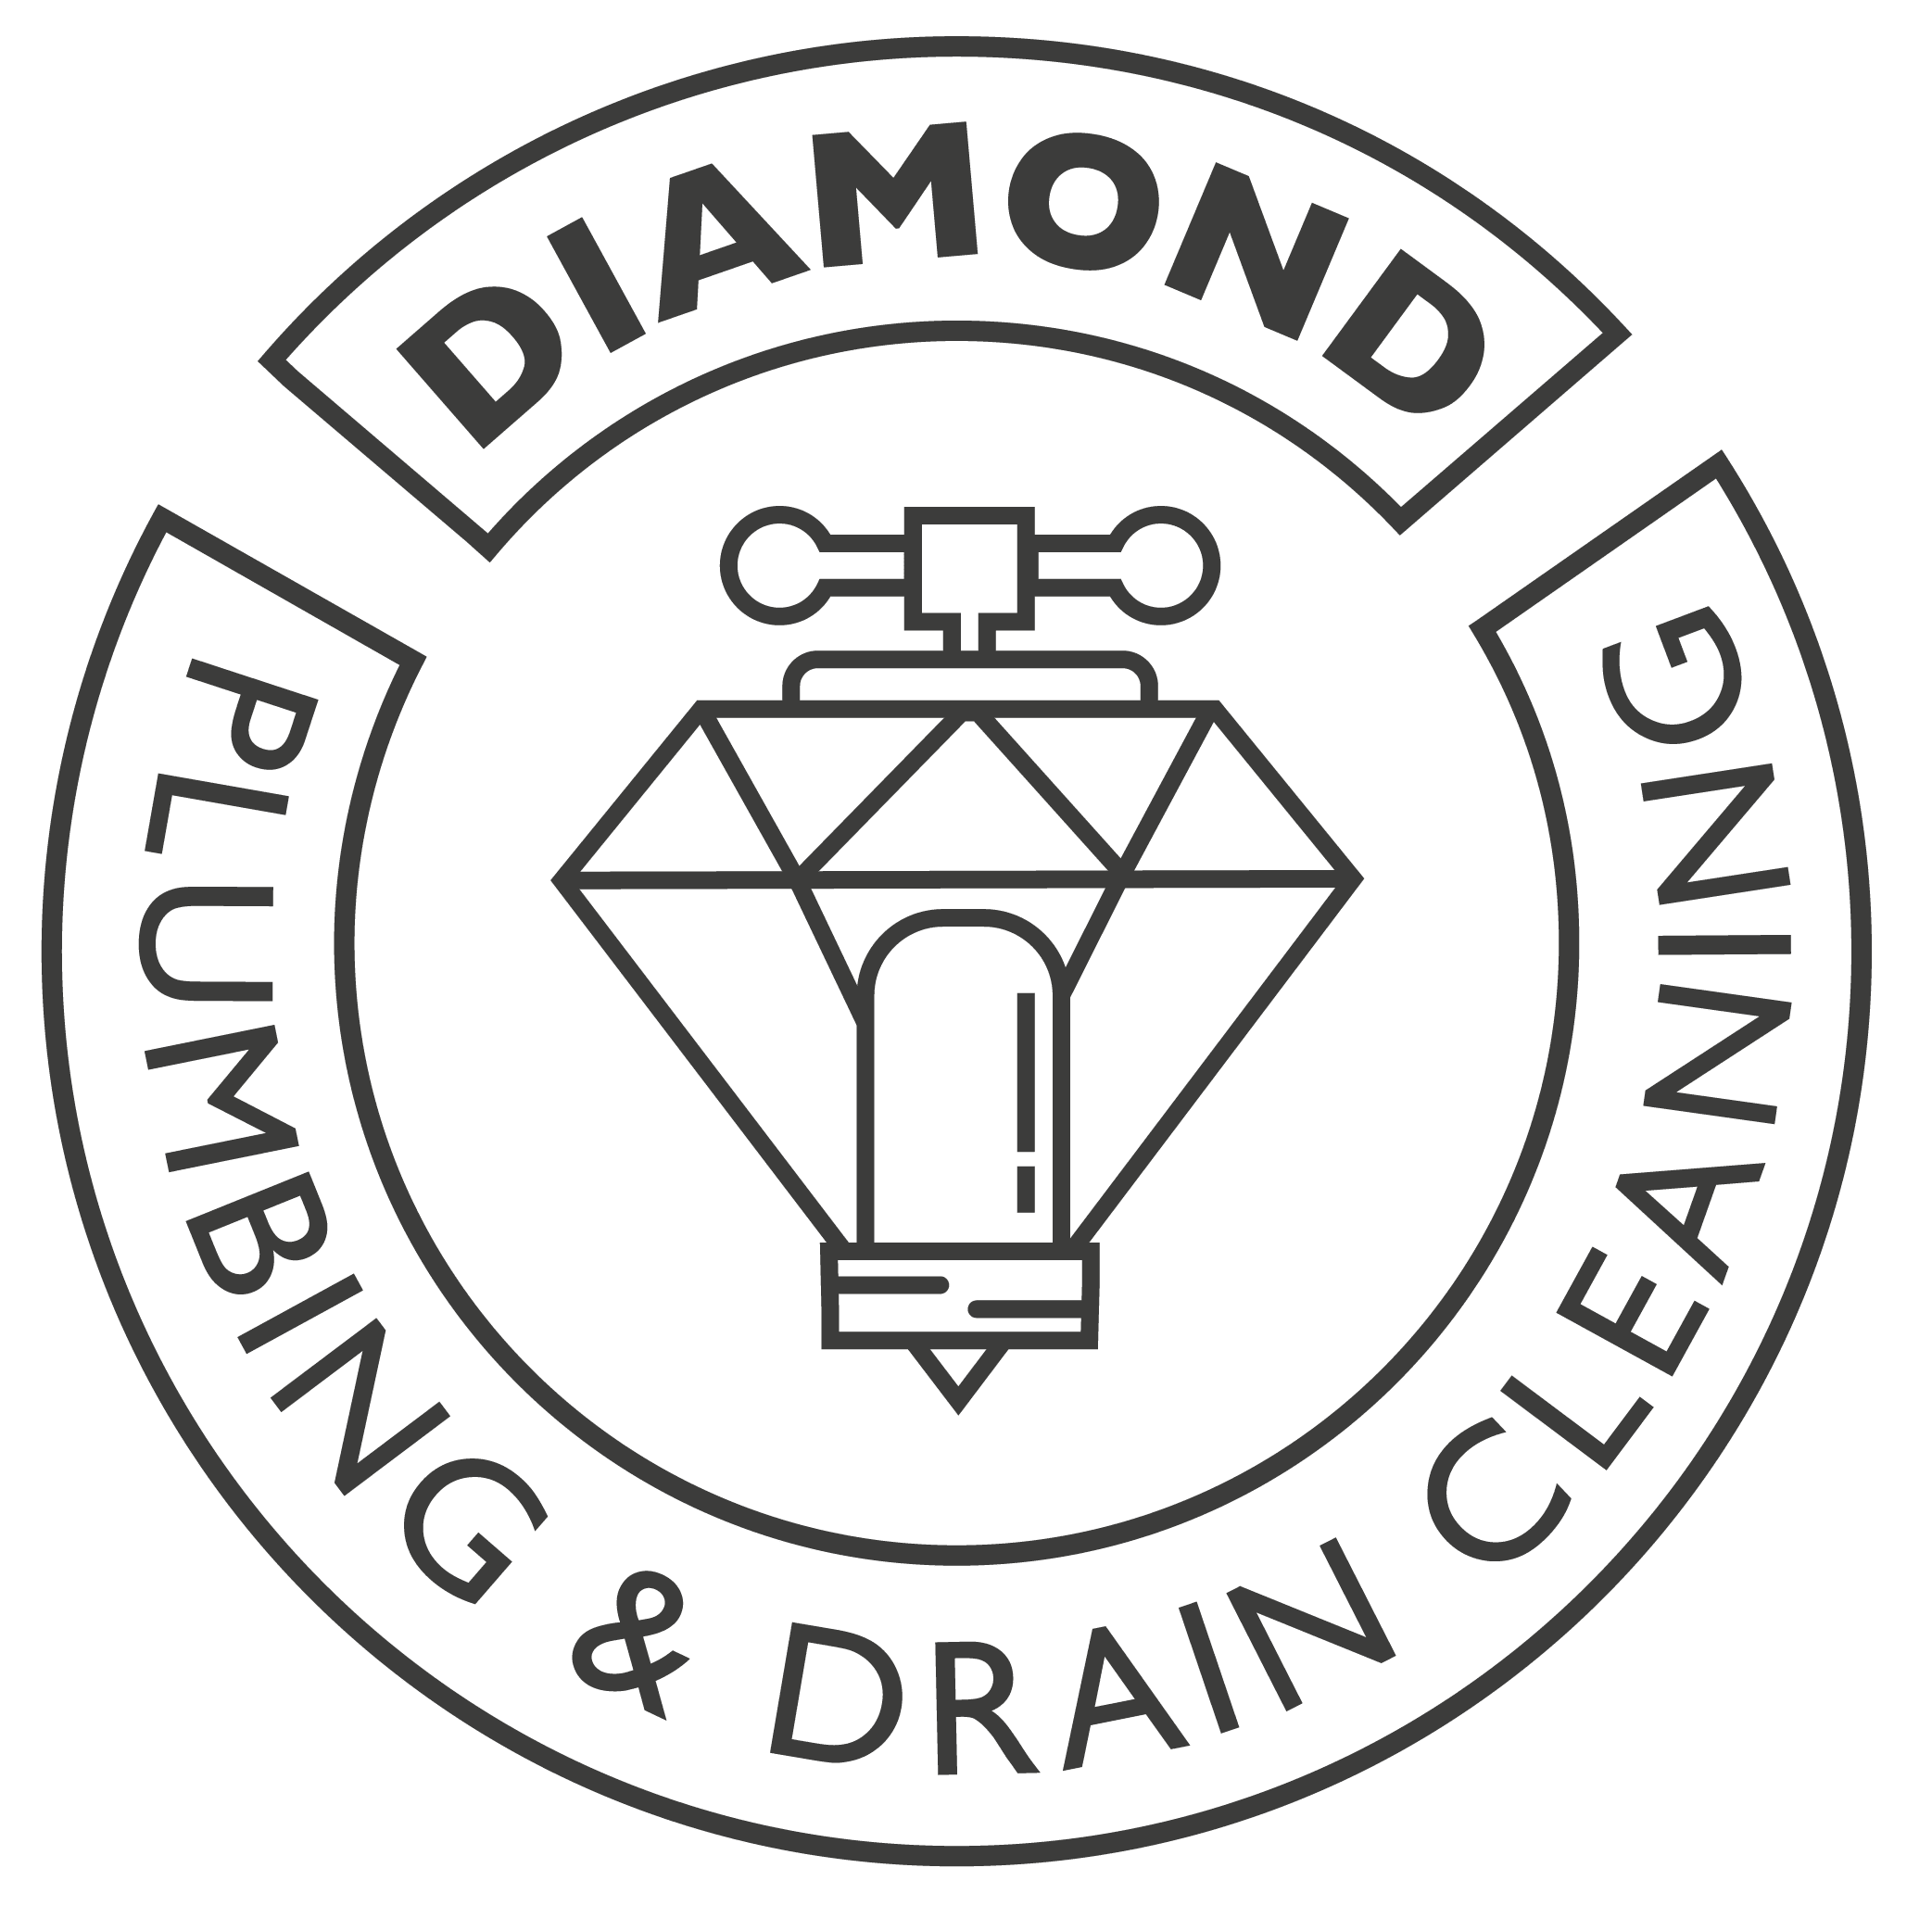 Diamond Plumbing and Drain Cleaning